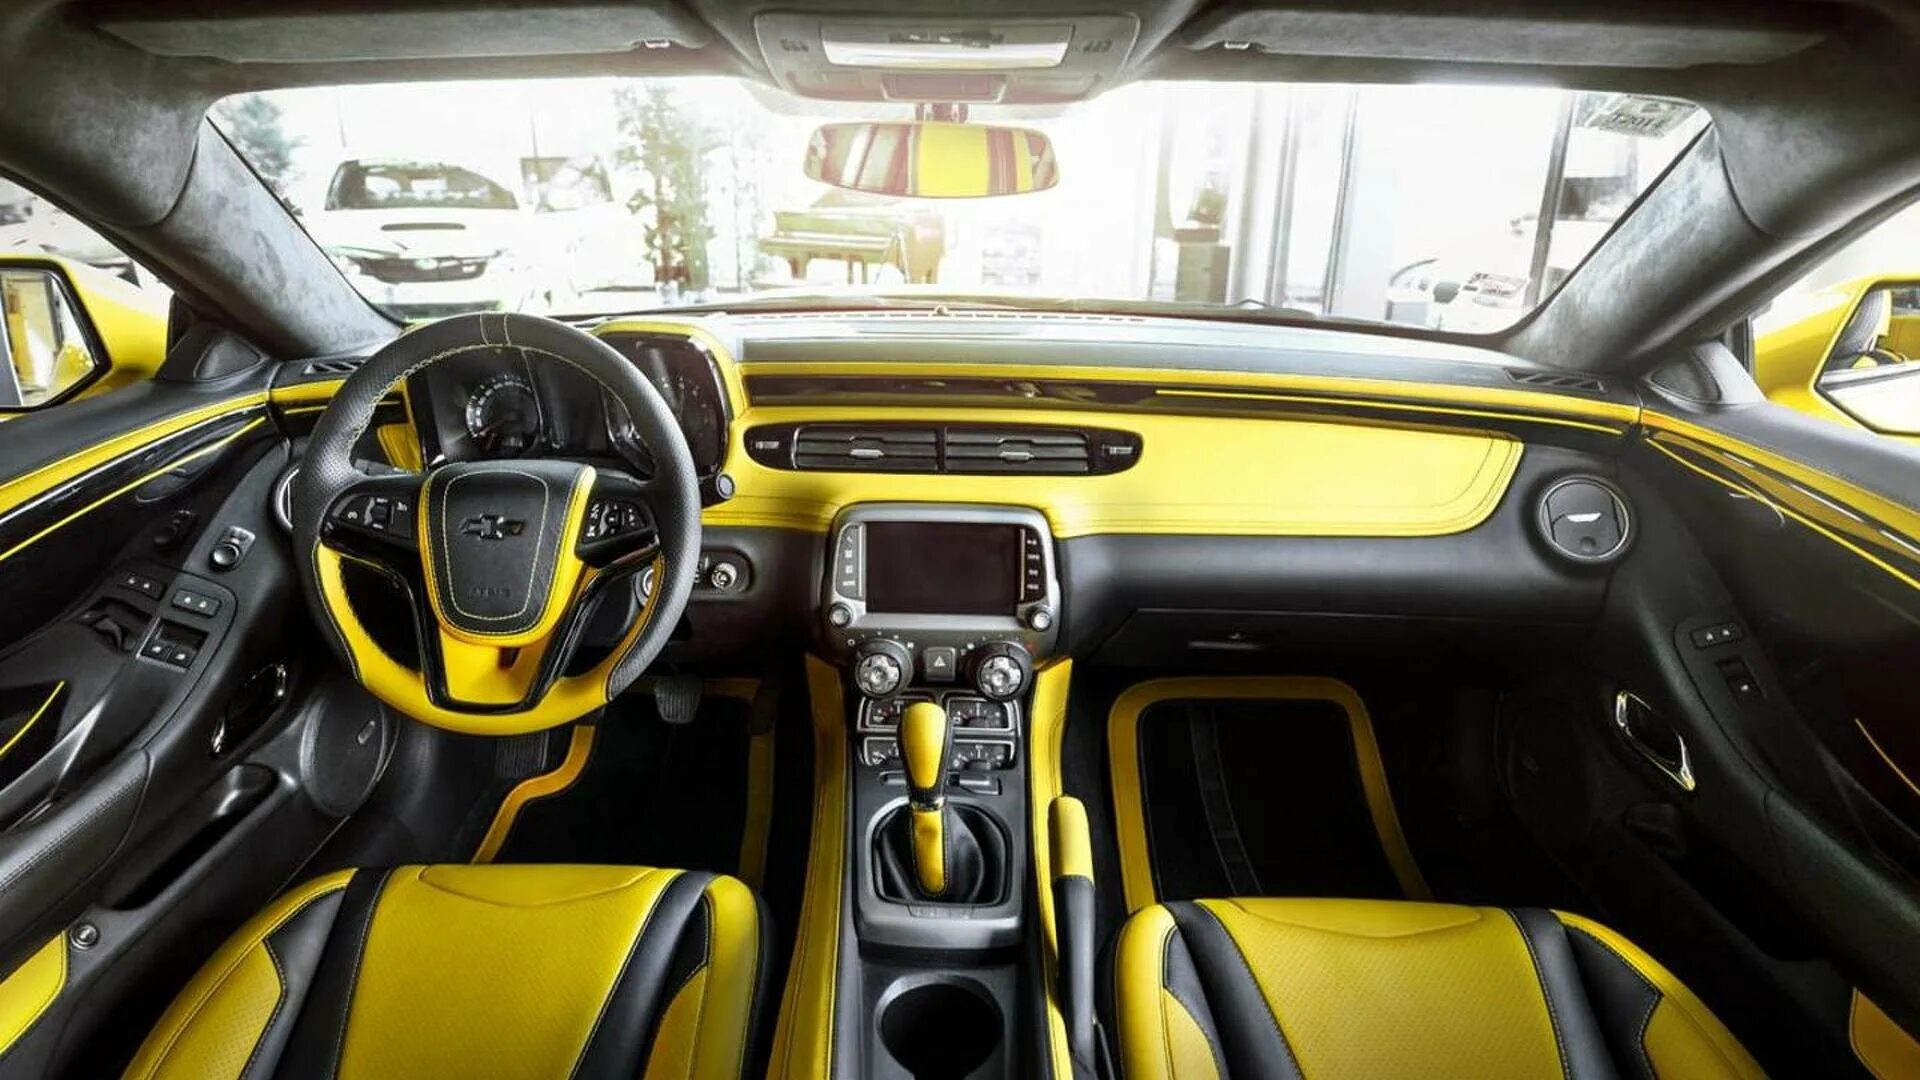 Шевроле камаро салон. Шевроле Камаро zl1 салон. Шевроле Камаро Бамблби салон. Chevrolet Camaro 2020 салон жёлтый. Chevrolet Camaro салон желтый.